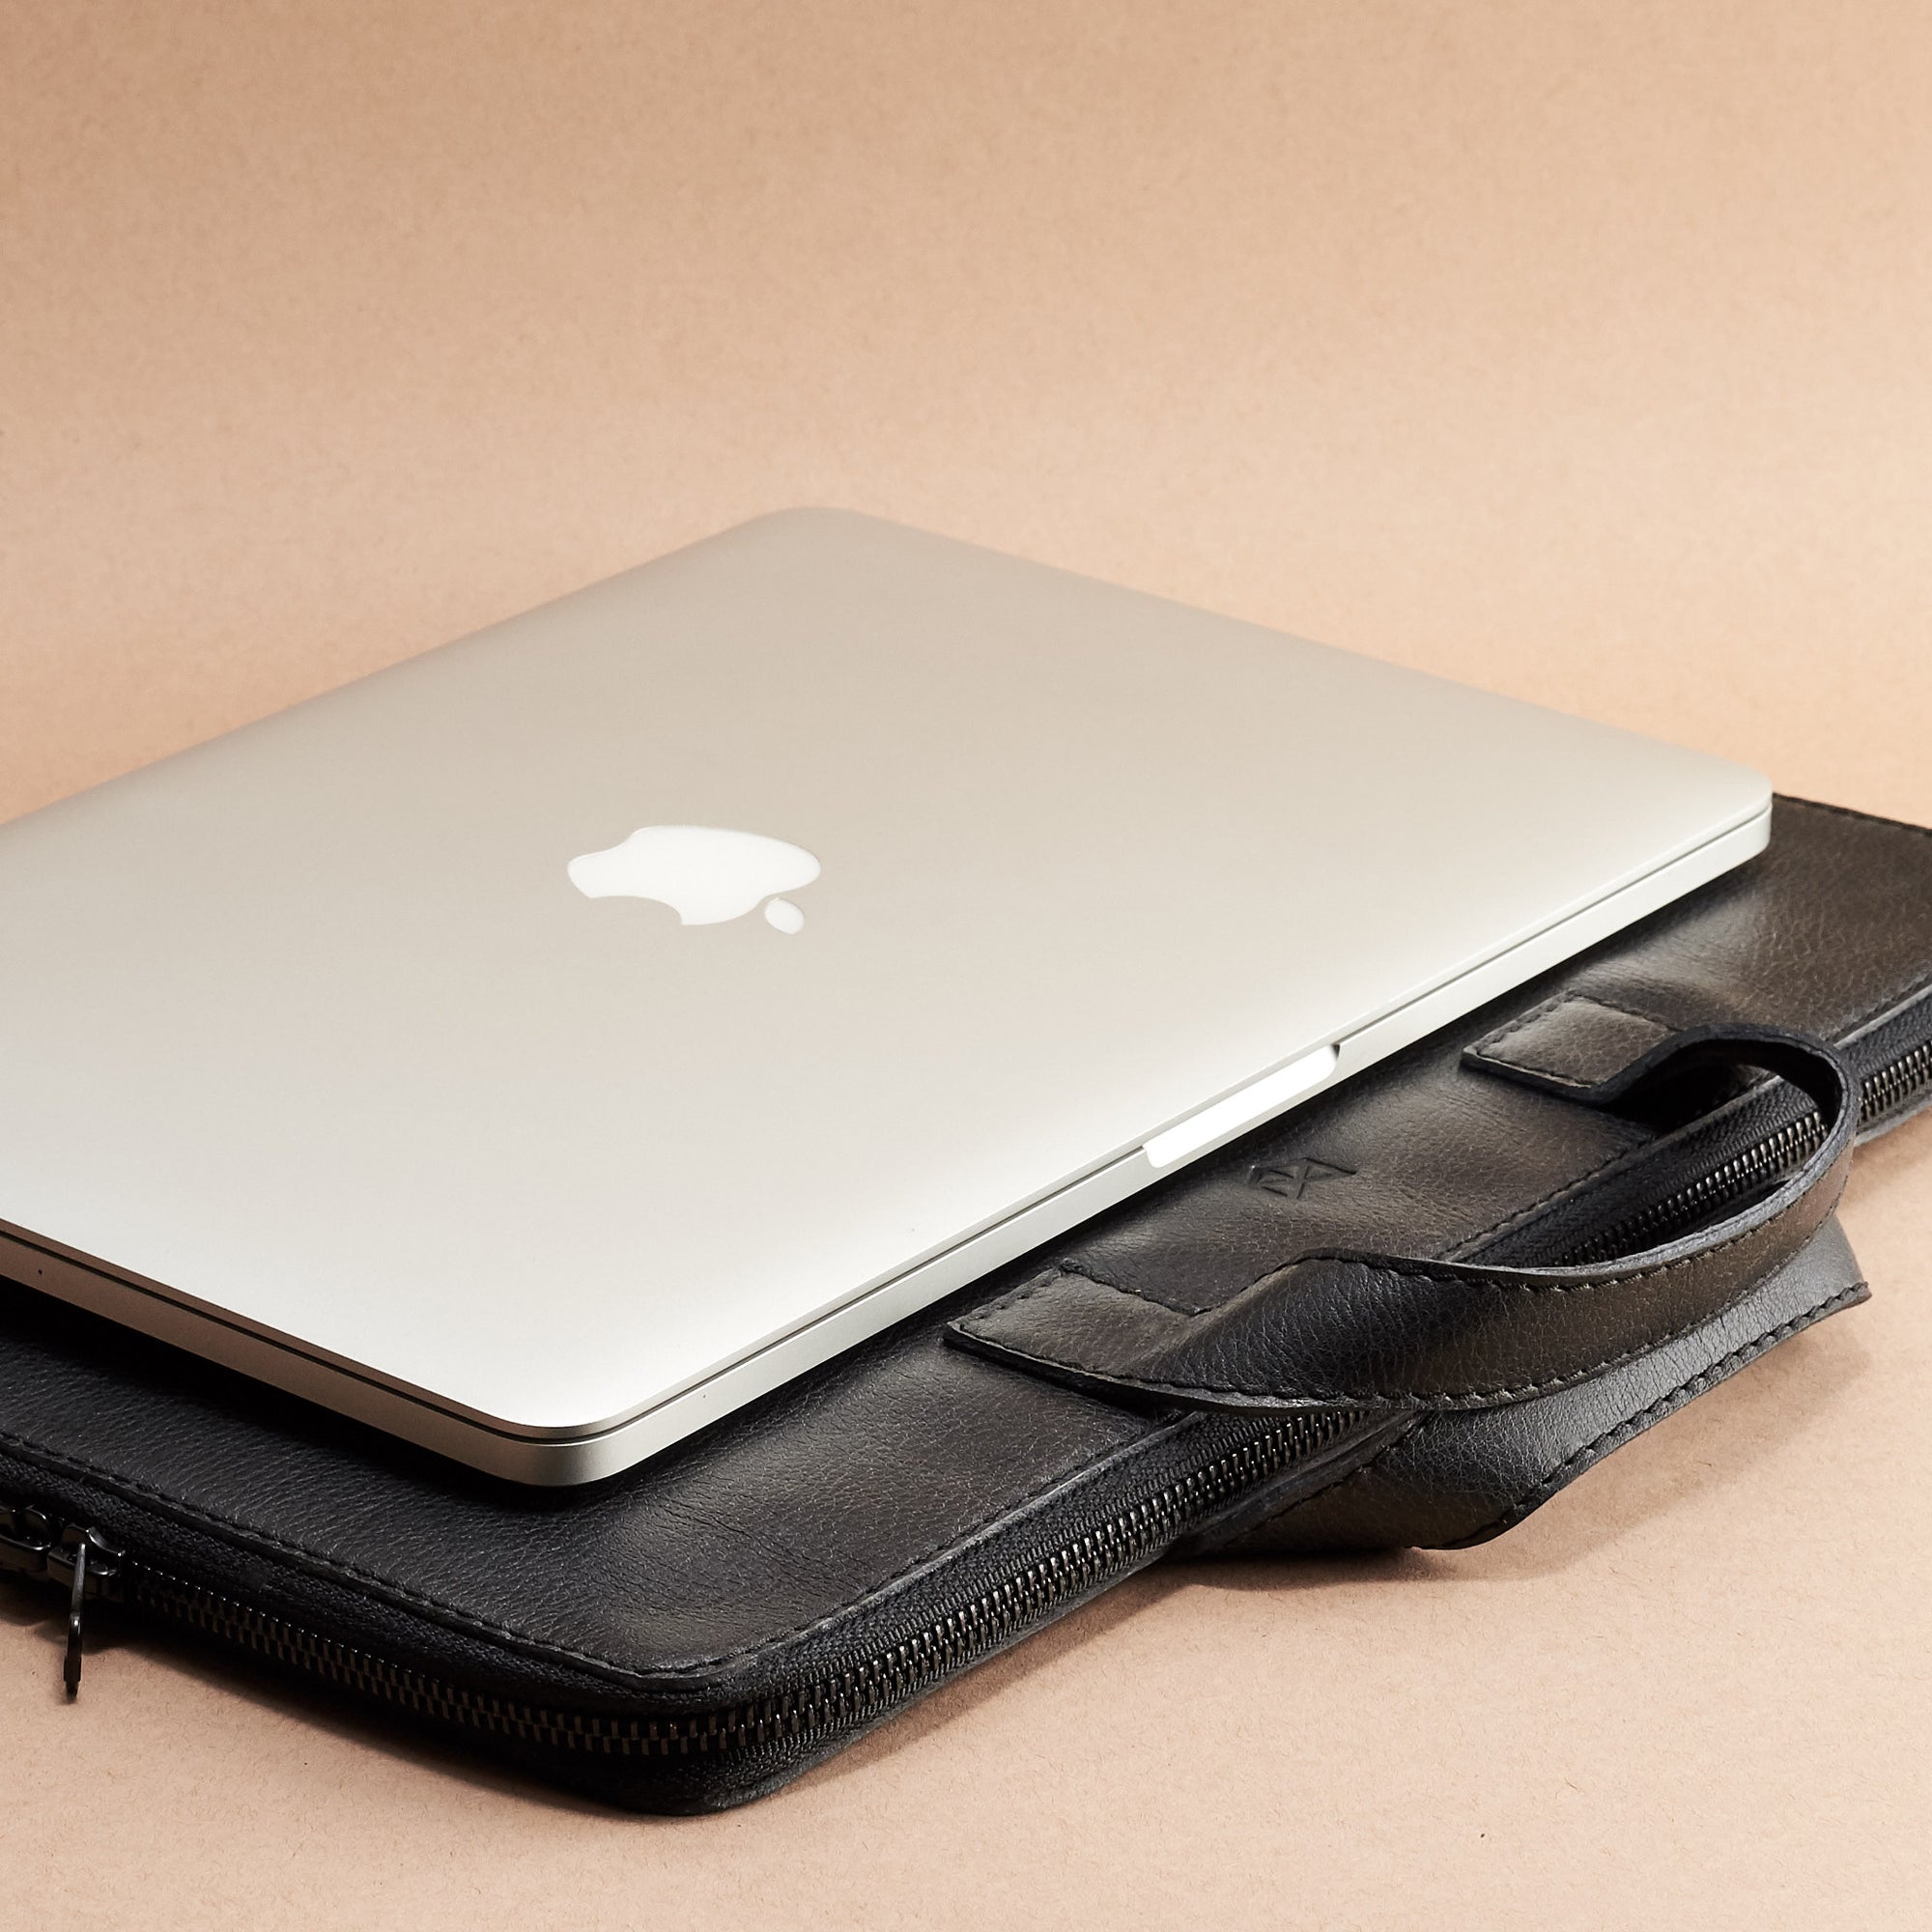 MacBook Pro 13-inch bag. Black Laptop Portfolio. Business Document Organizer by Capra Leather